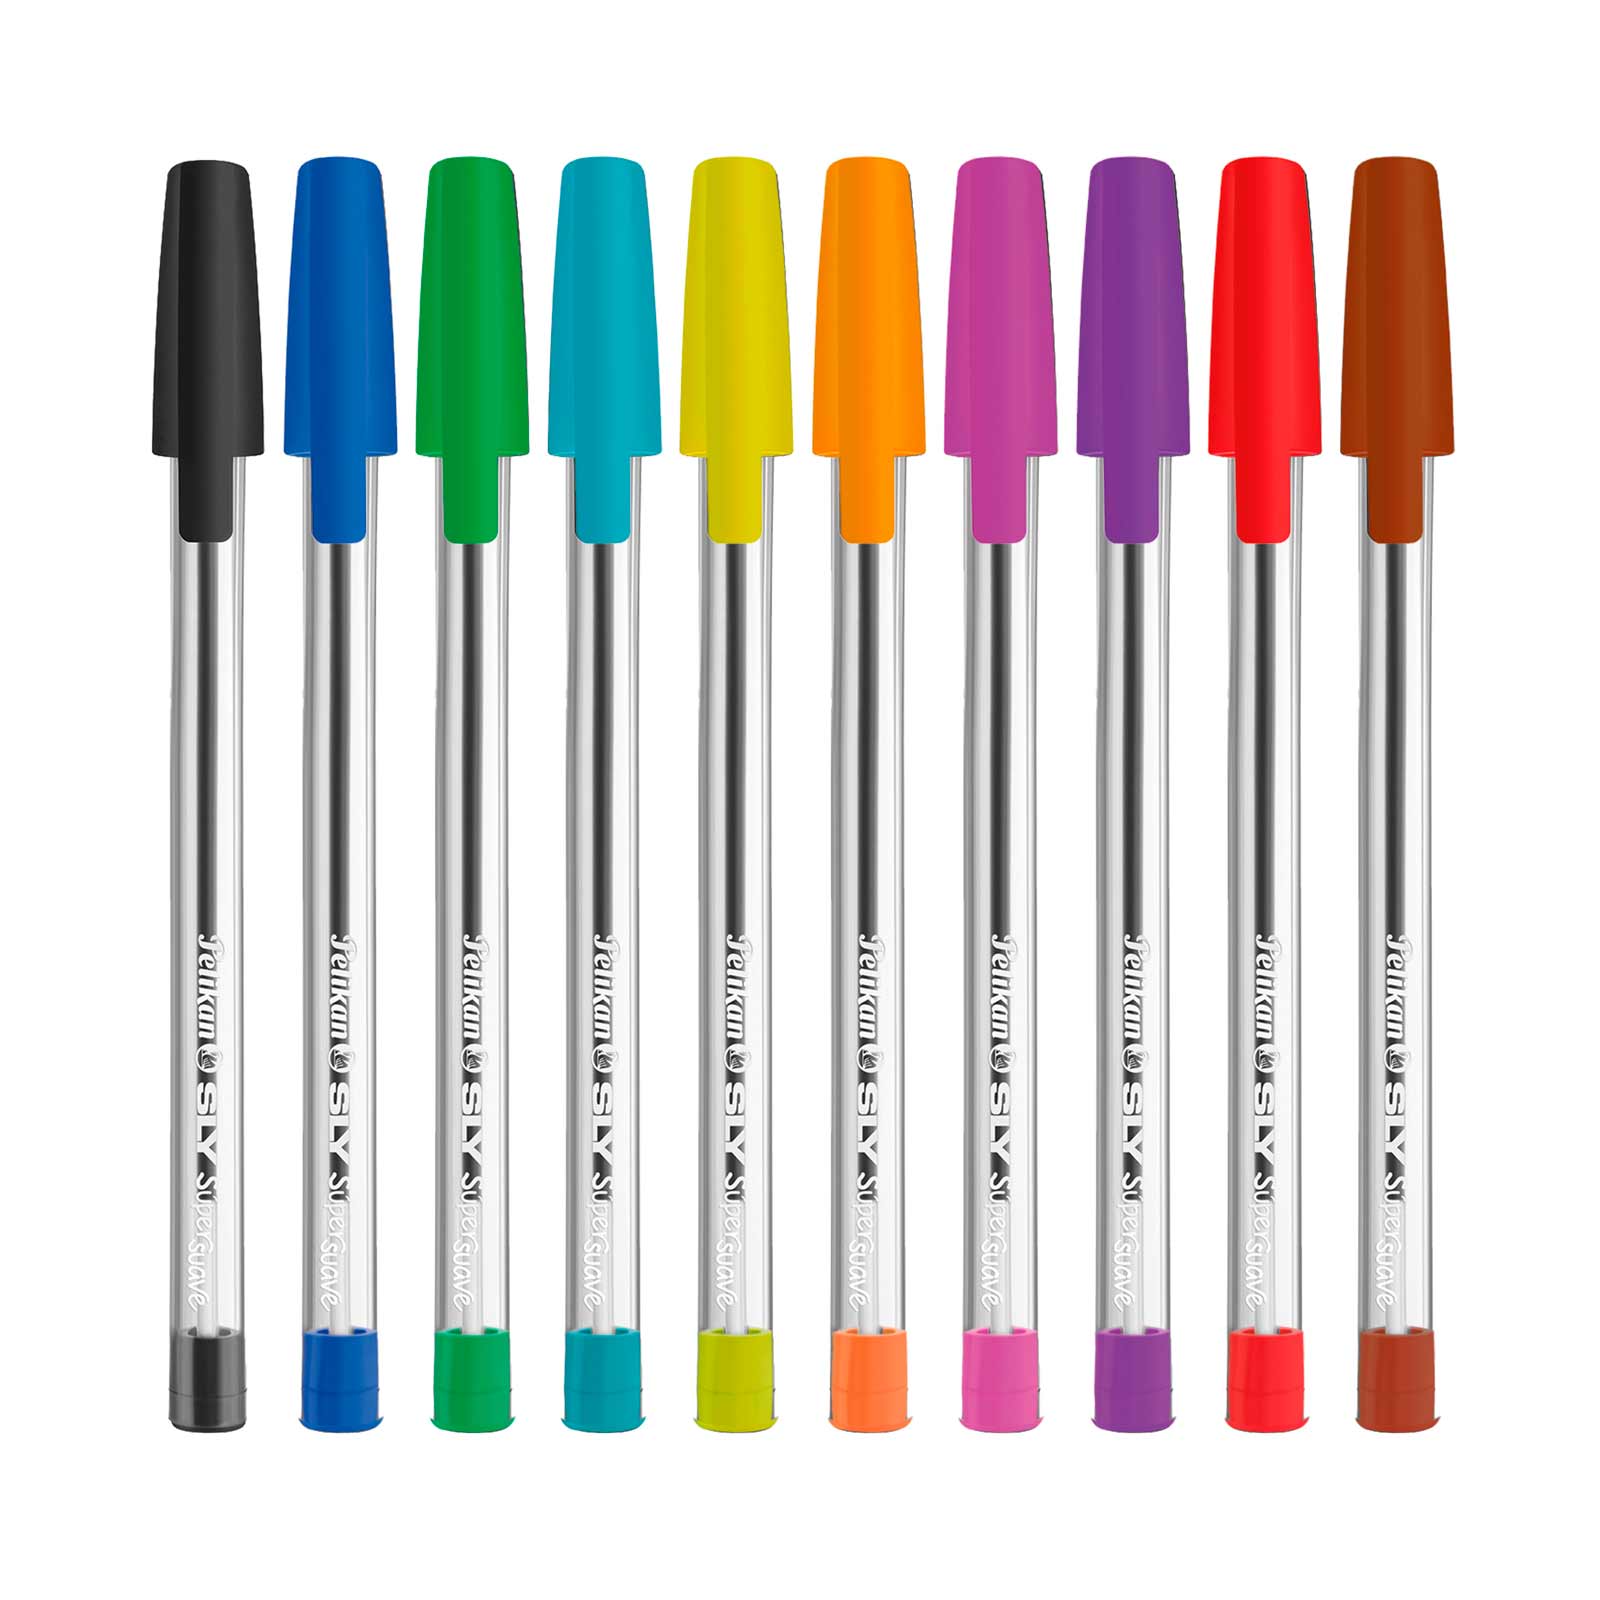 Bolígrafo Pelikan Sly colores surtidos, 10 unidades